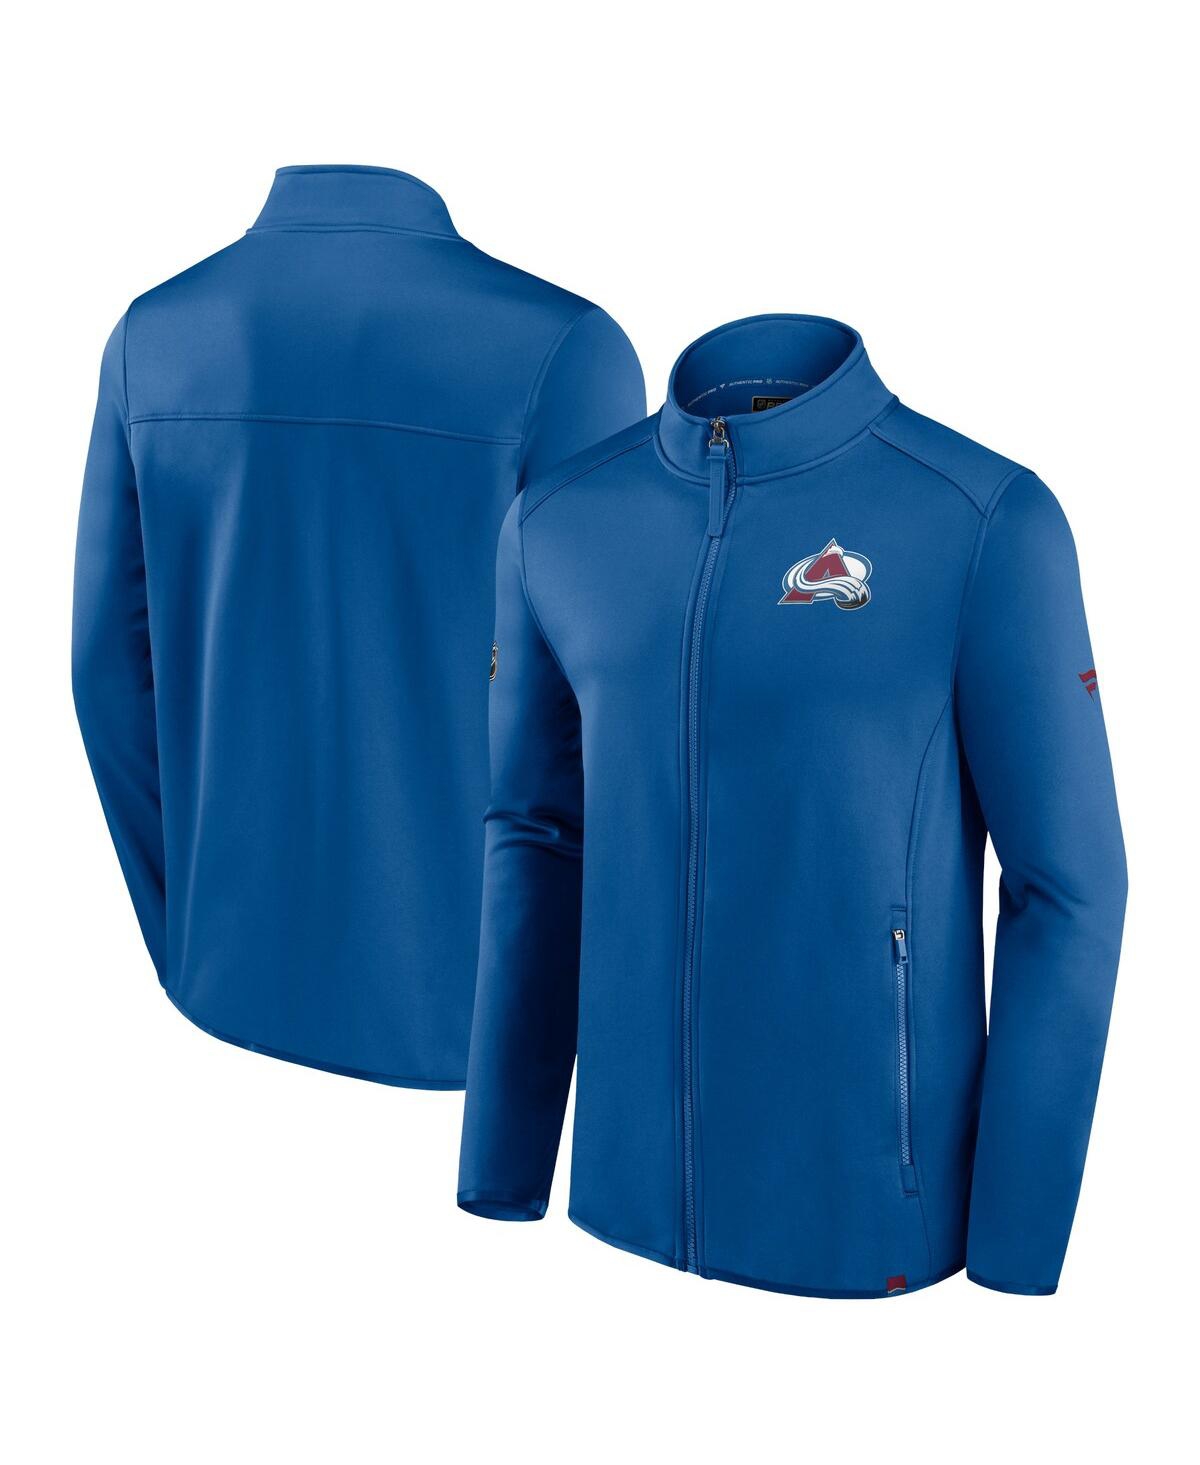 Shop Fanatics Men's  Blue Colorado Avalanche Authentic Pro Full-zip Jacket